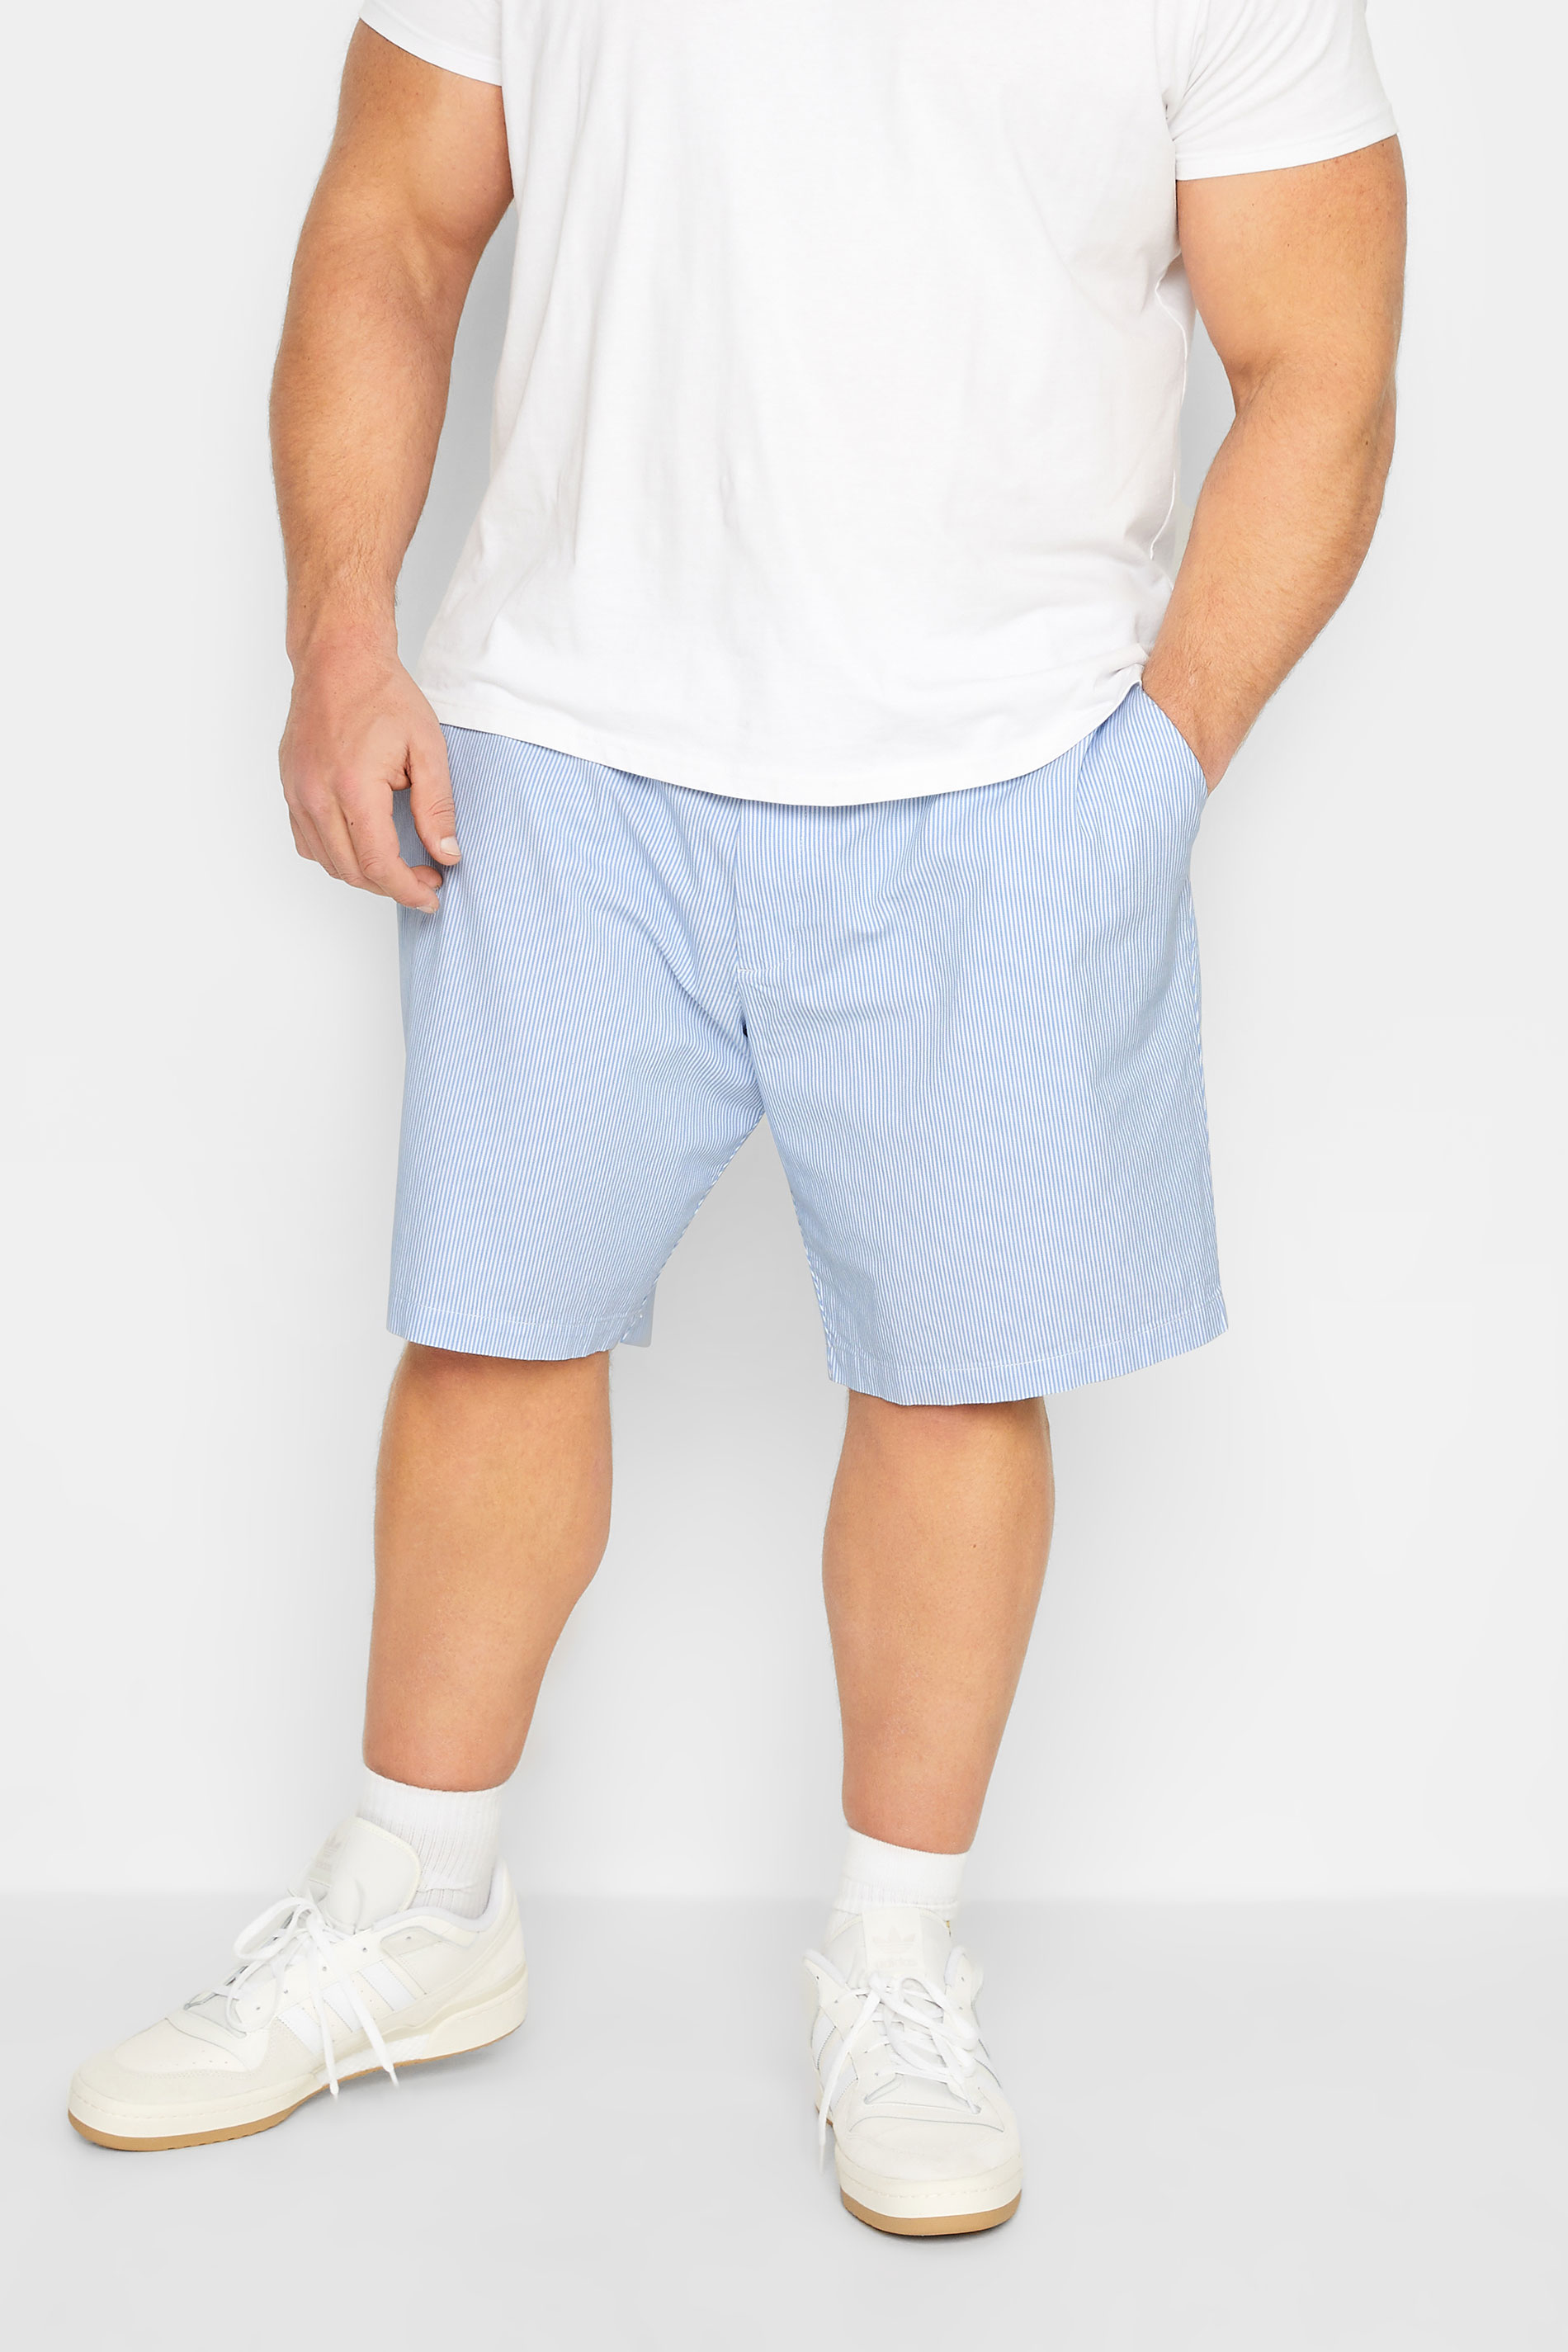 BadRhino Big & Tall Mens Light Blue Stripe Chino Shorts | BadRhino  1